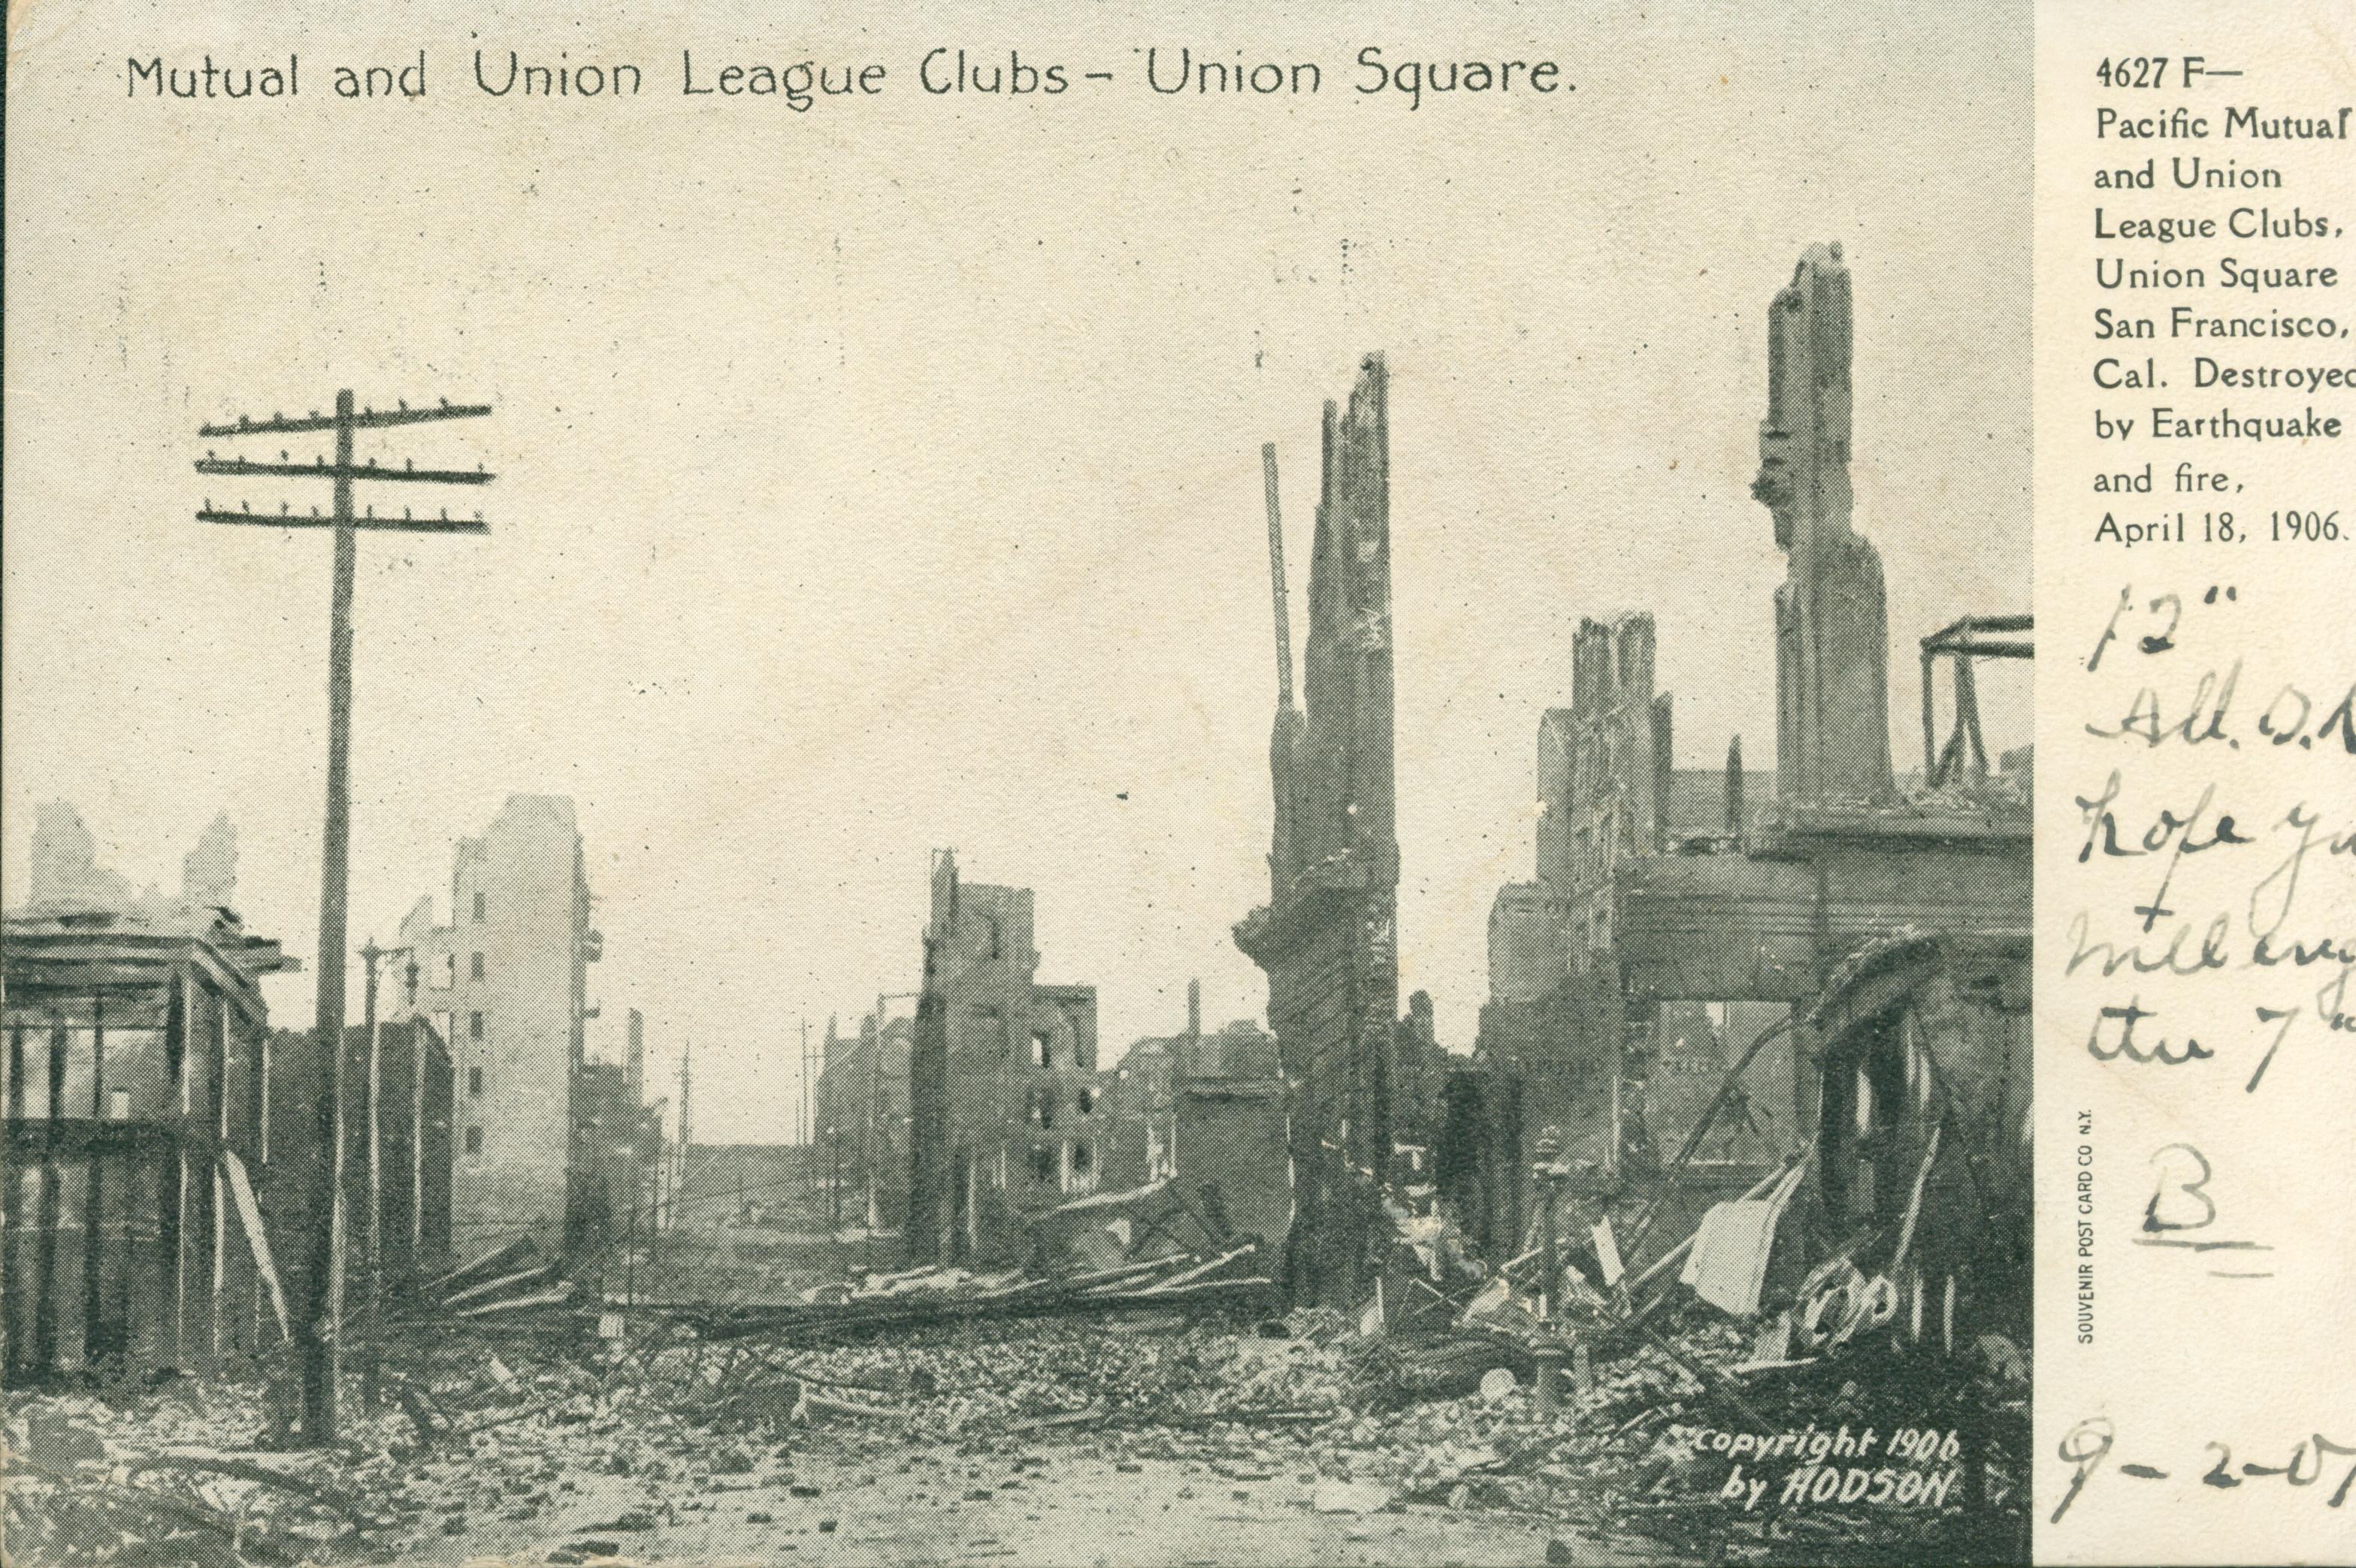 Shows the destruction around Union Square in San Francisco.